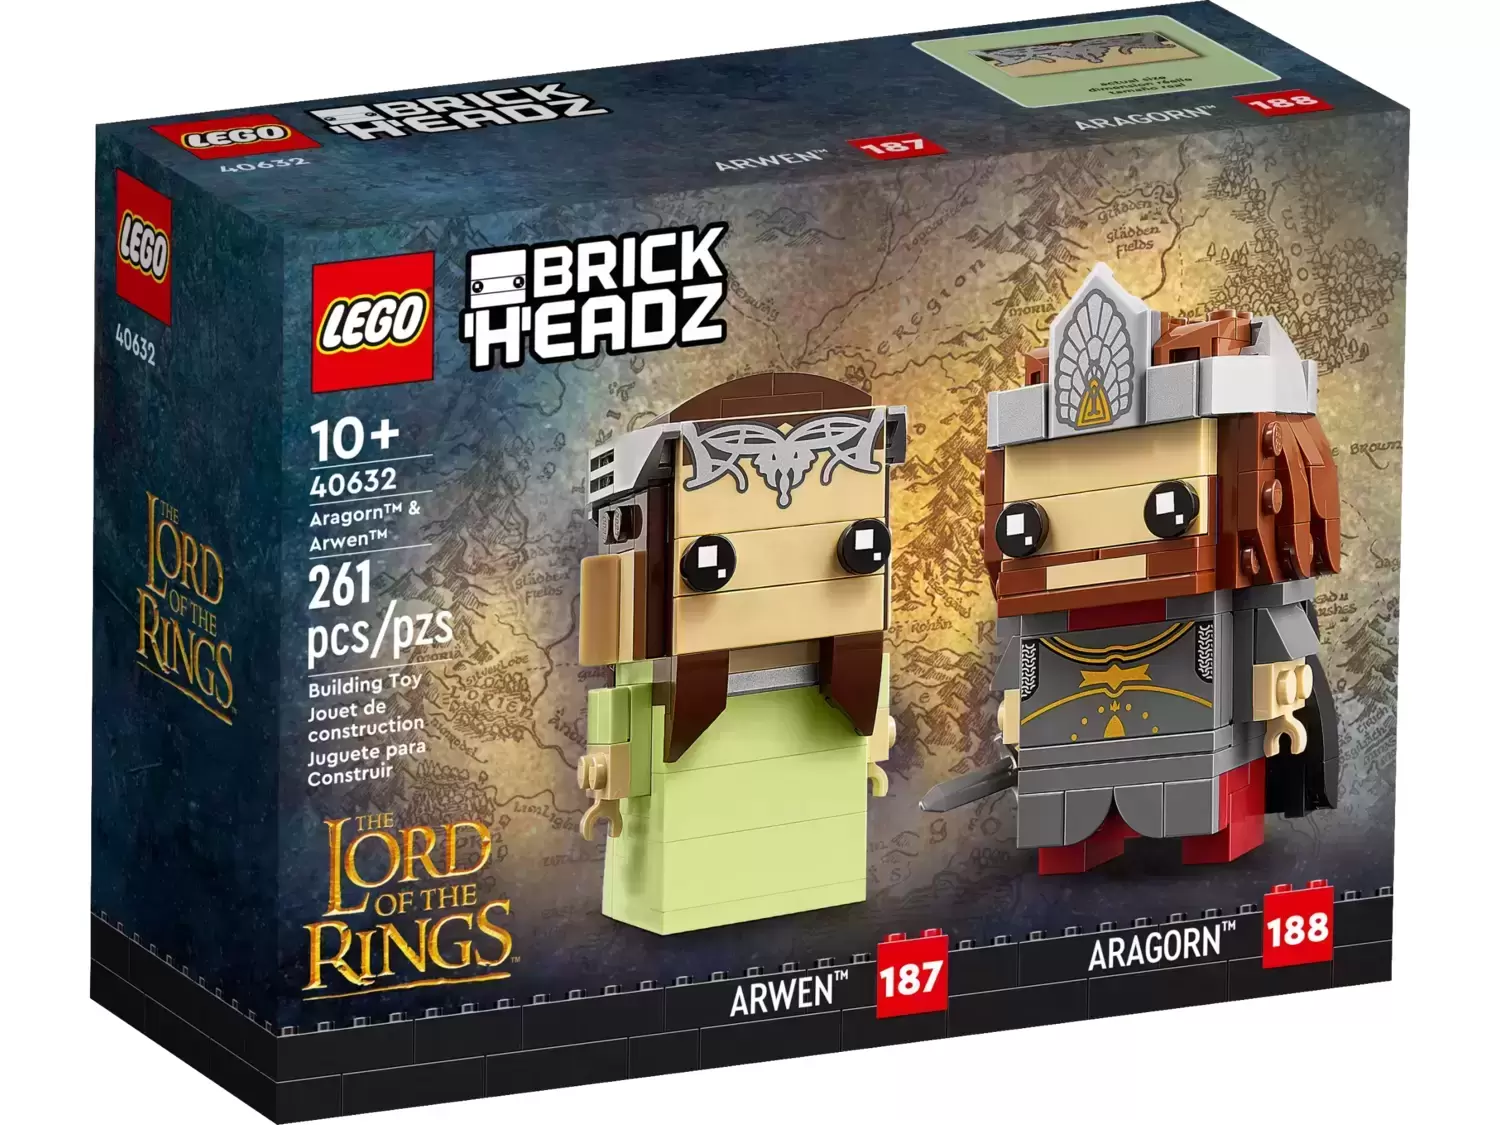 LEGO BrickHeadz - 187 & 188 - Arwen & Aragorn